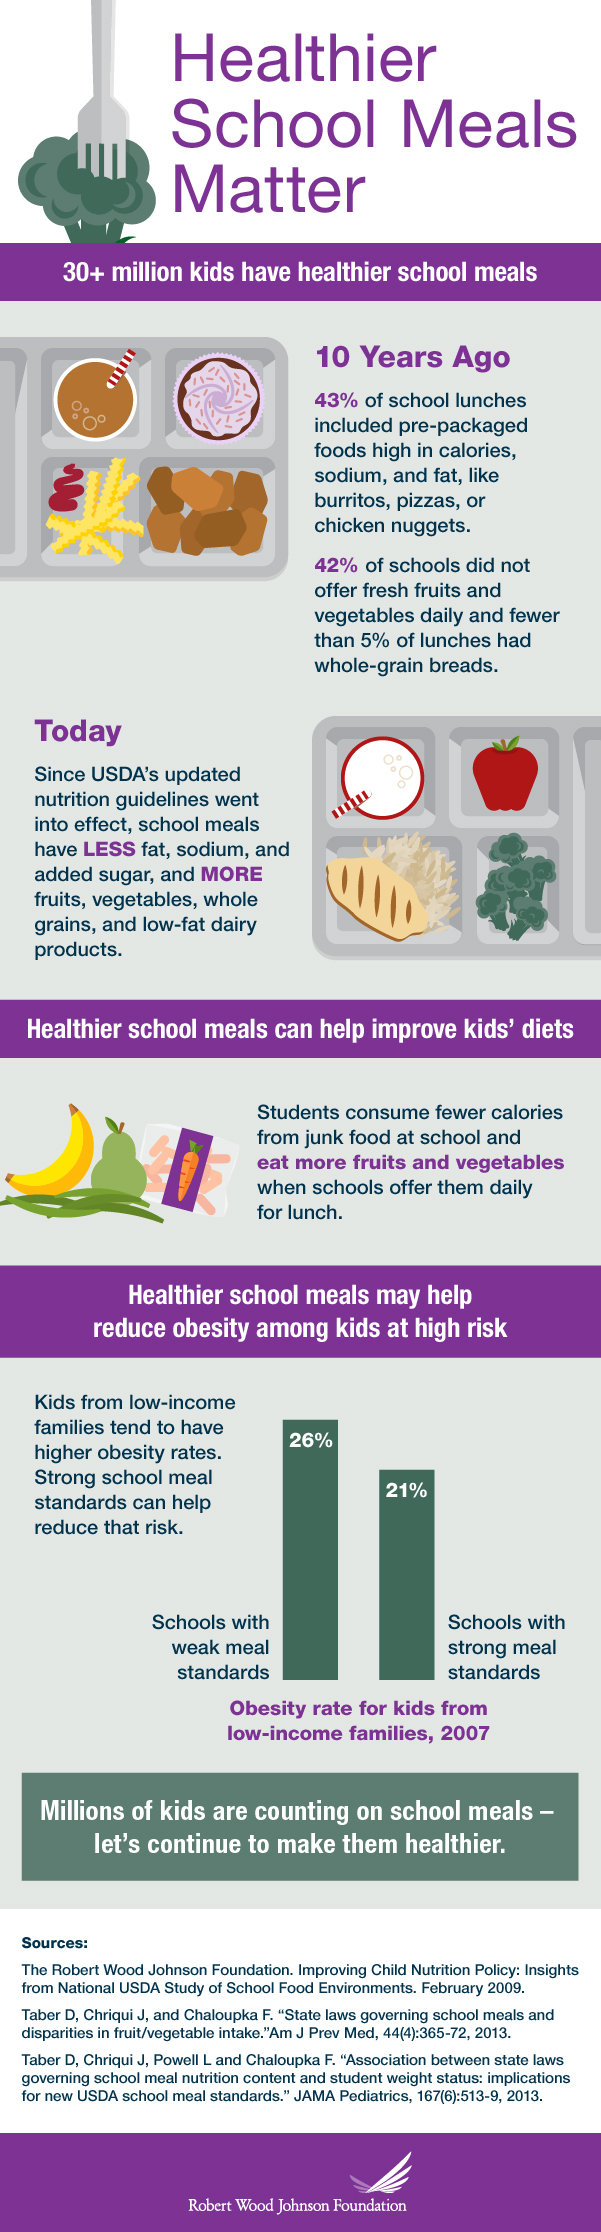 Infographic describing why healthier school meals matter. Low resolution.